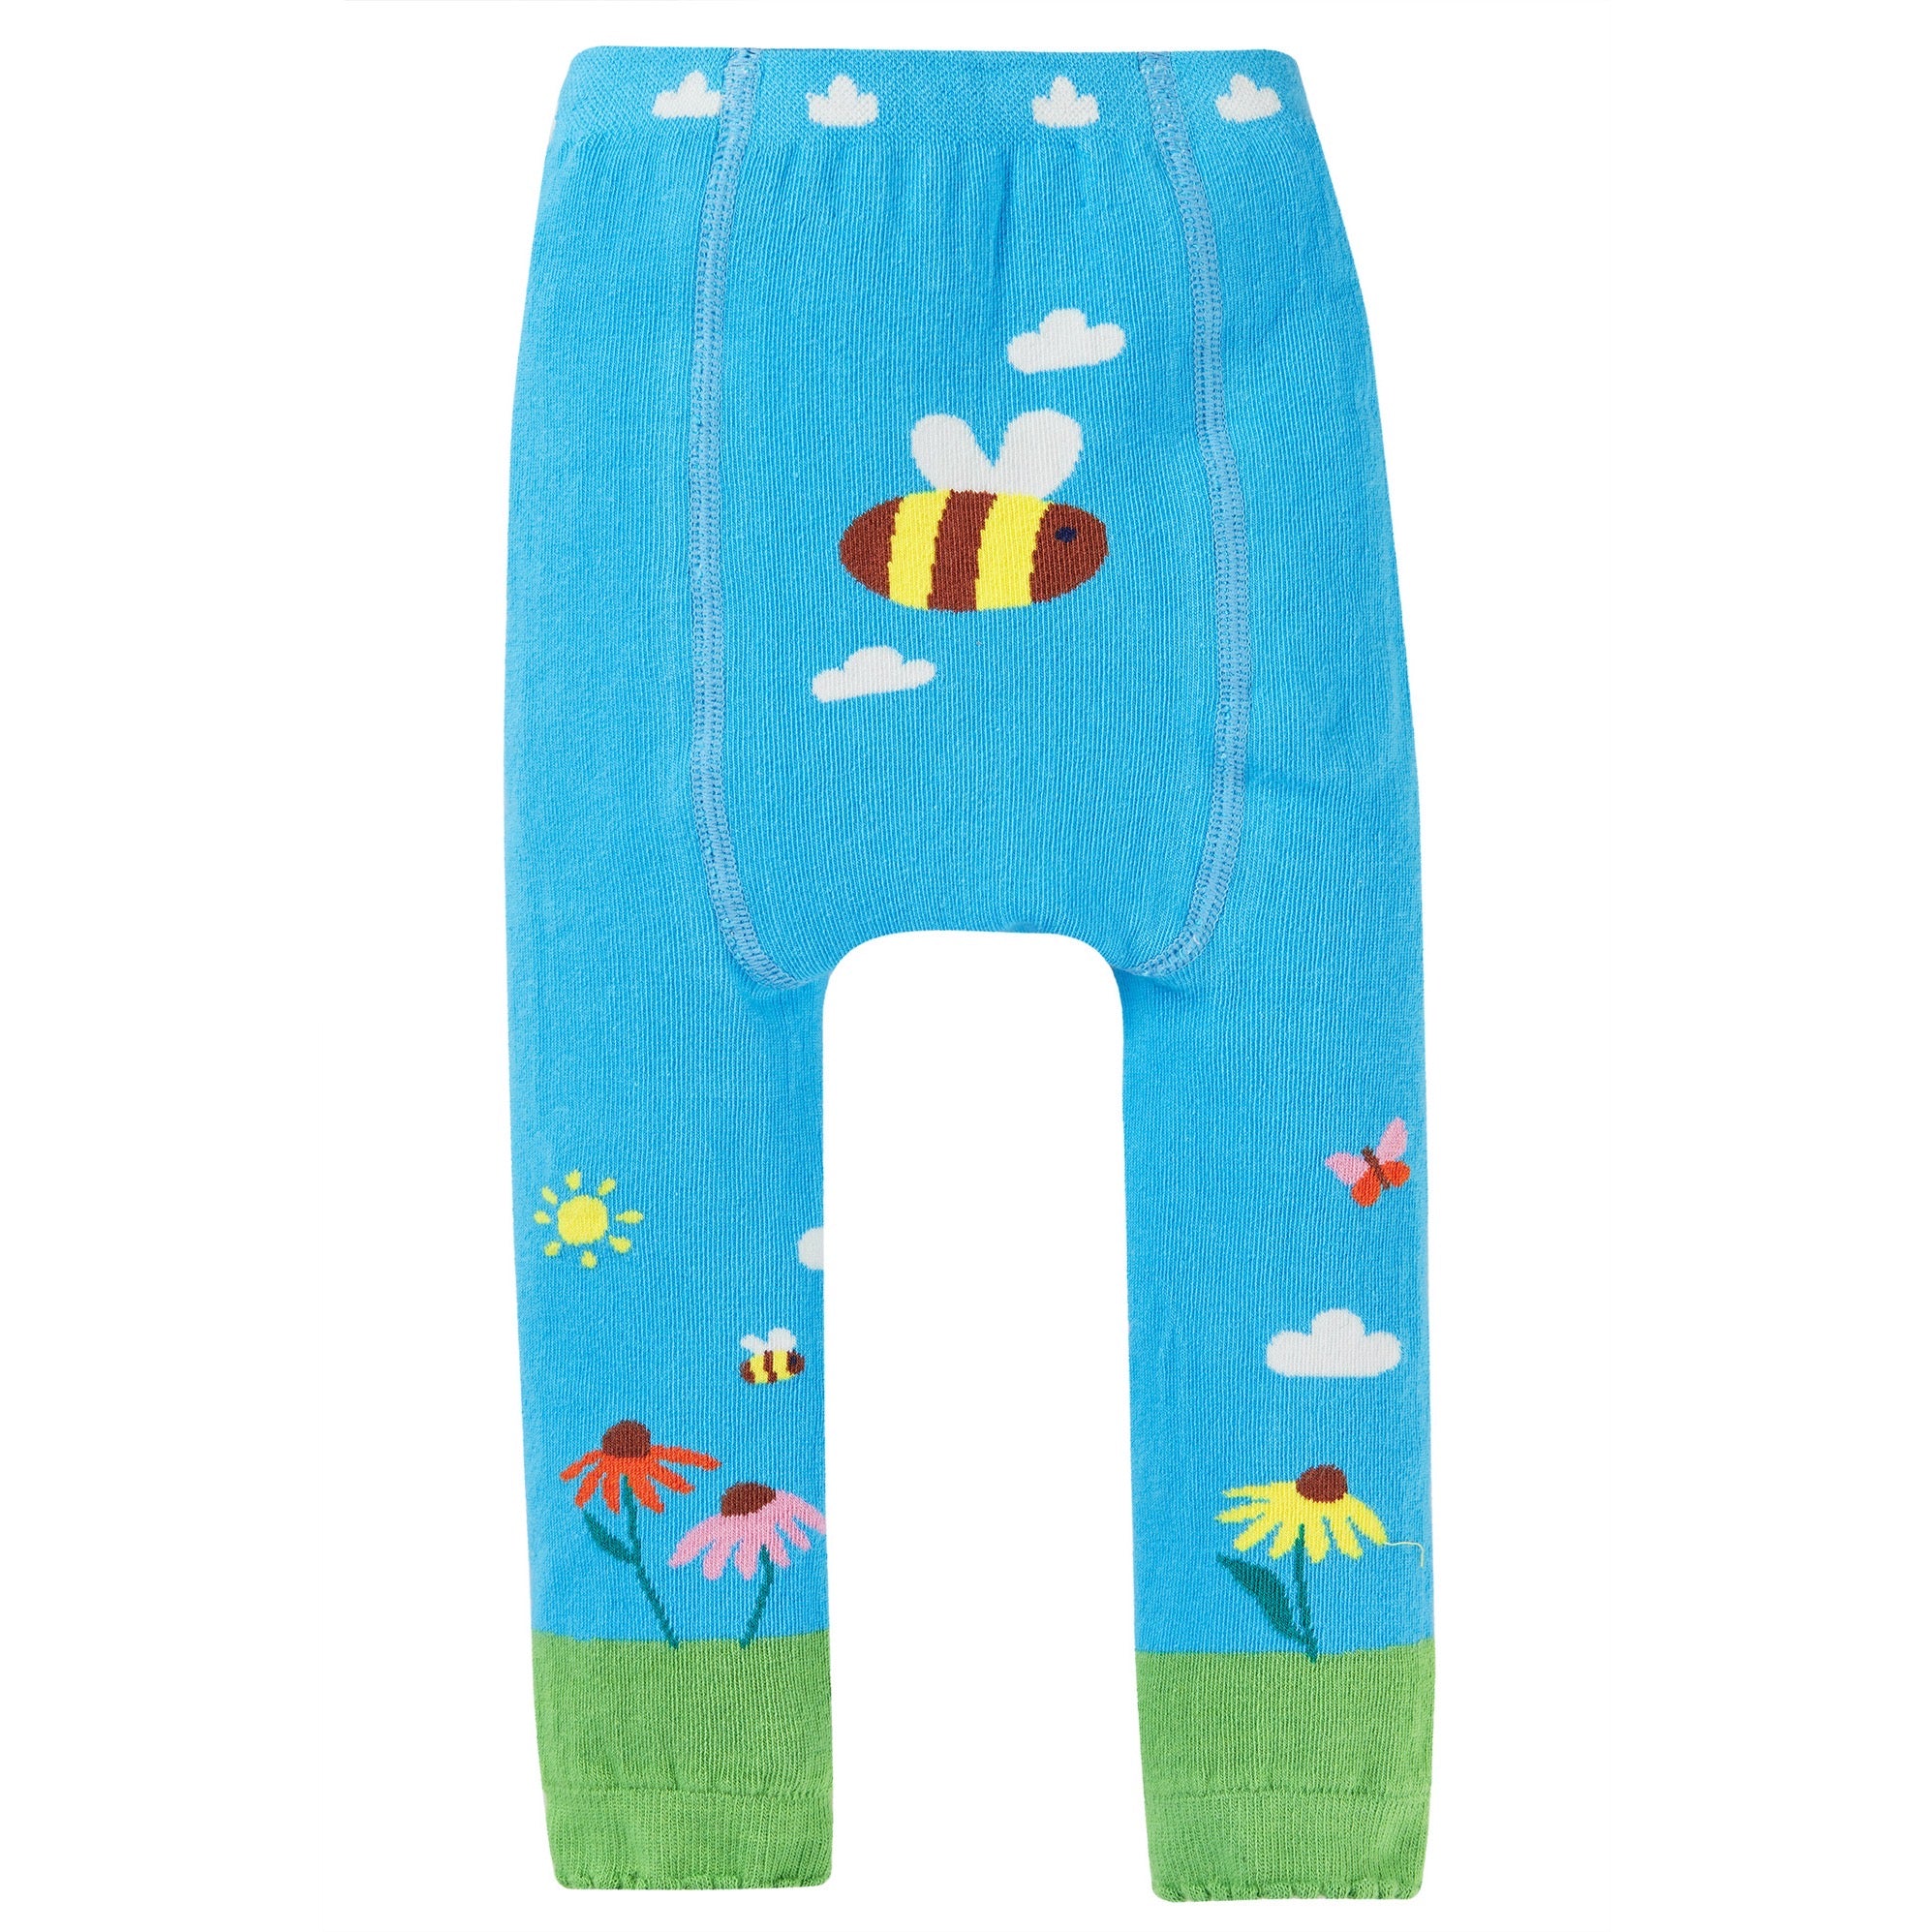 Frugi Infant Knitted Leggings Ll8yy Blue Bee Clothing 0-6M / Blue,6-12M / Blue,1-2YRS / Blue,2-4YRS / Blue